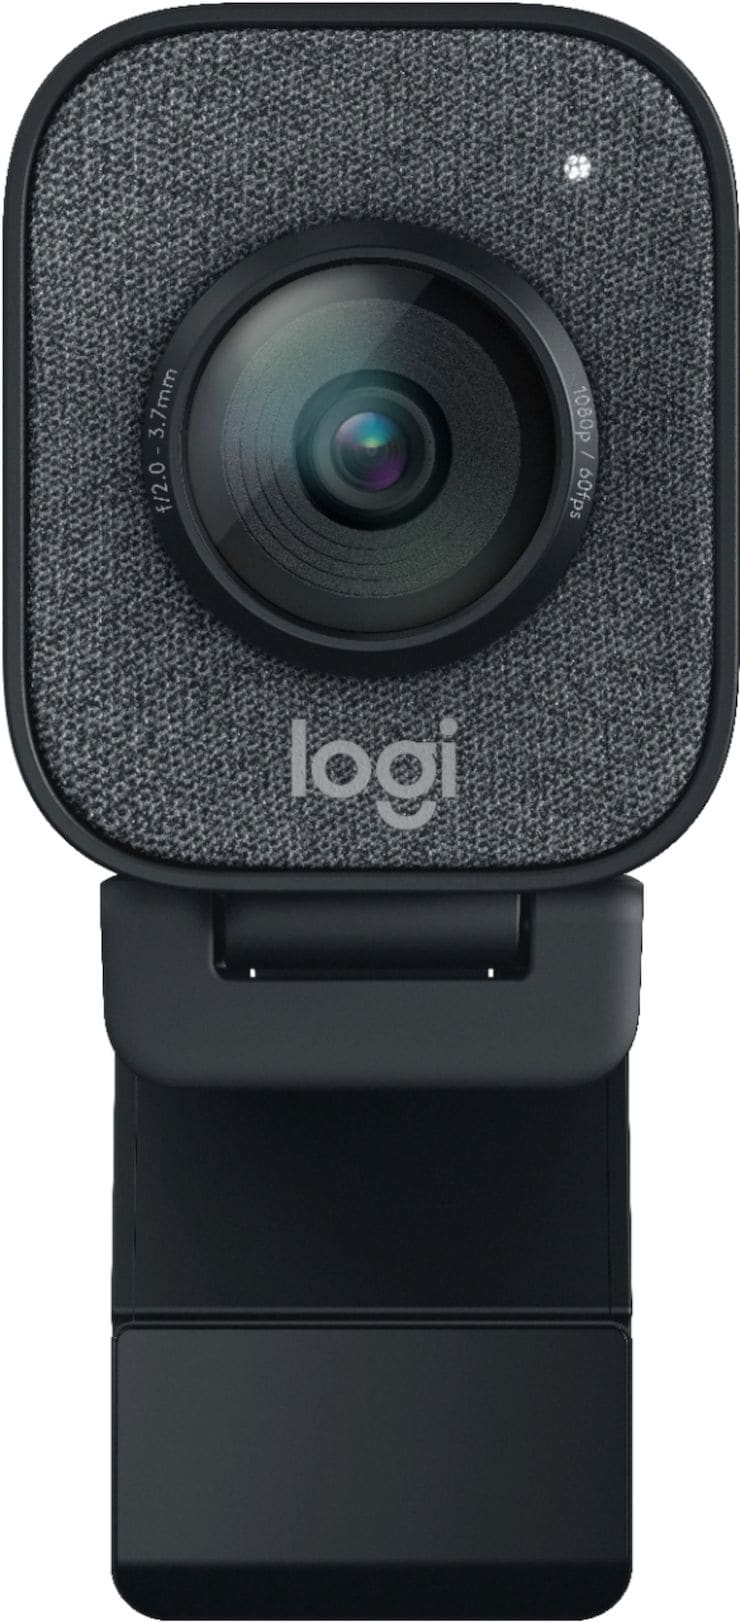 Logitech StreamCam camera appearance